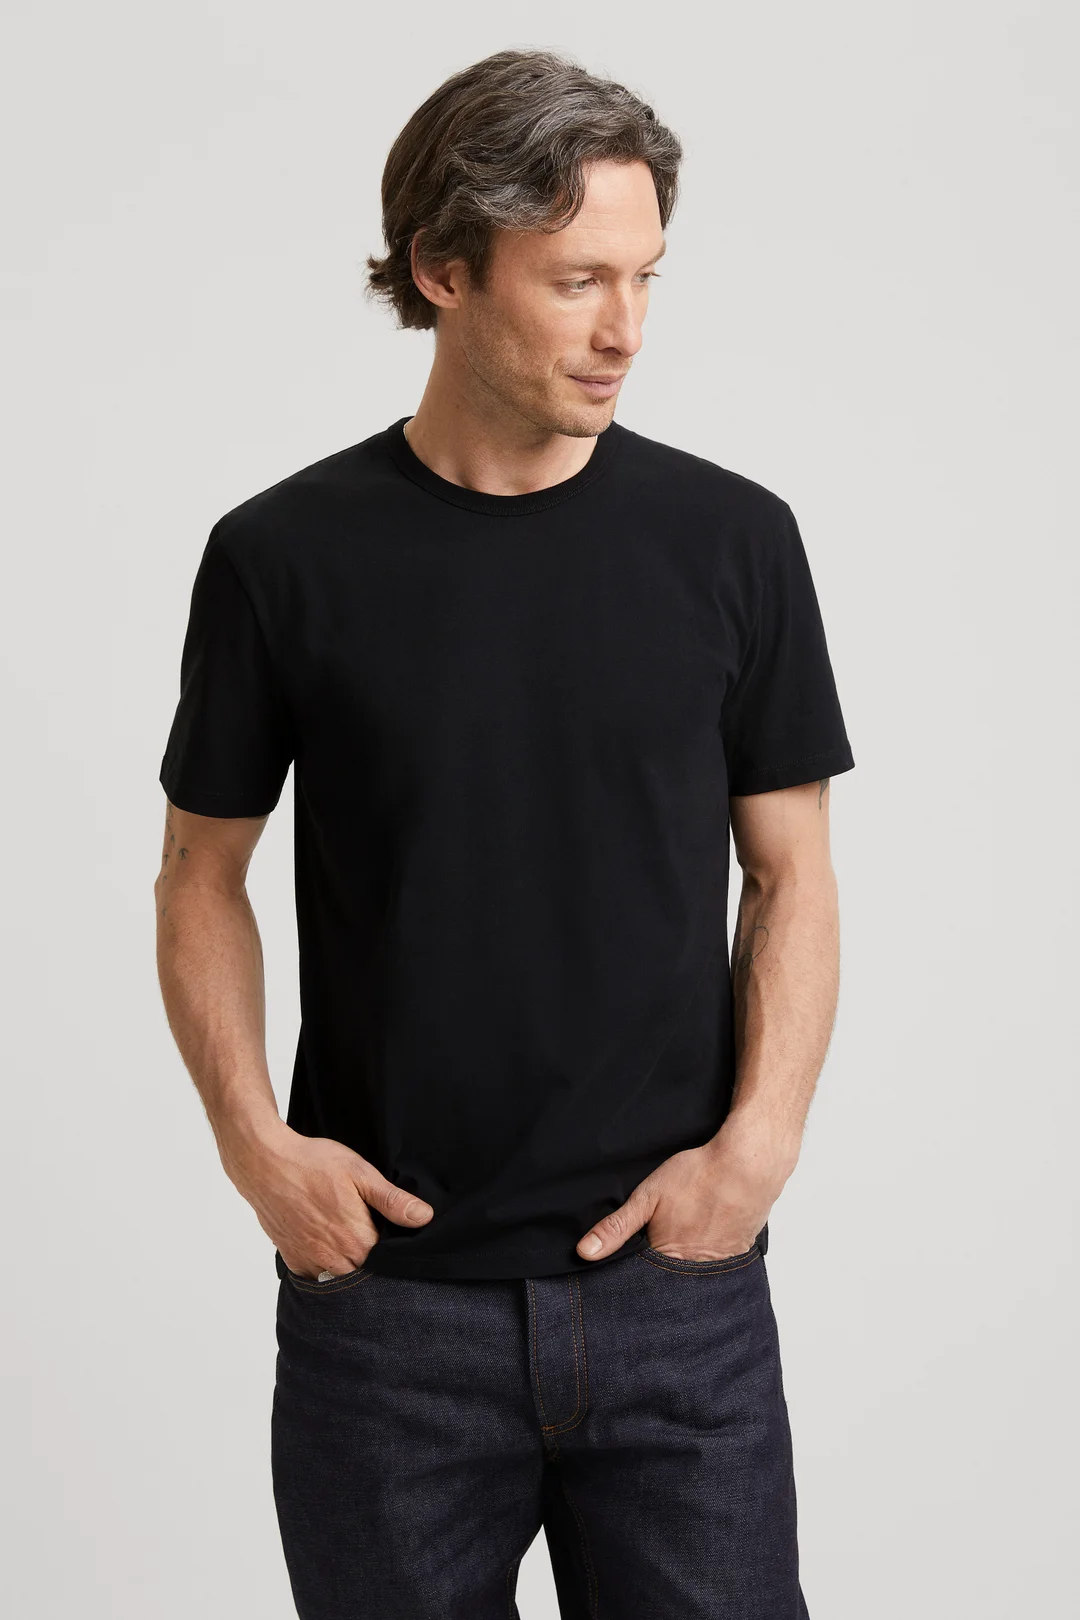 Black T-Shirt | Premium Heavyweight Cotton Crewneck - ASKET